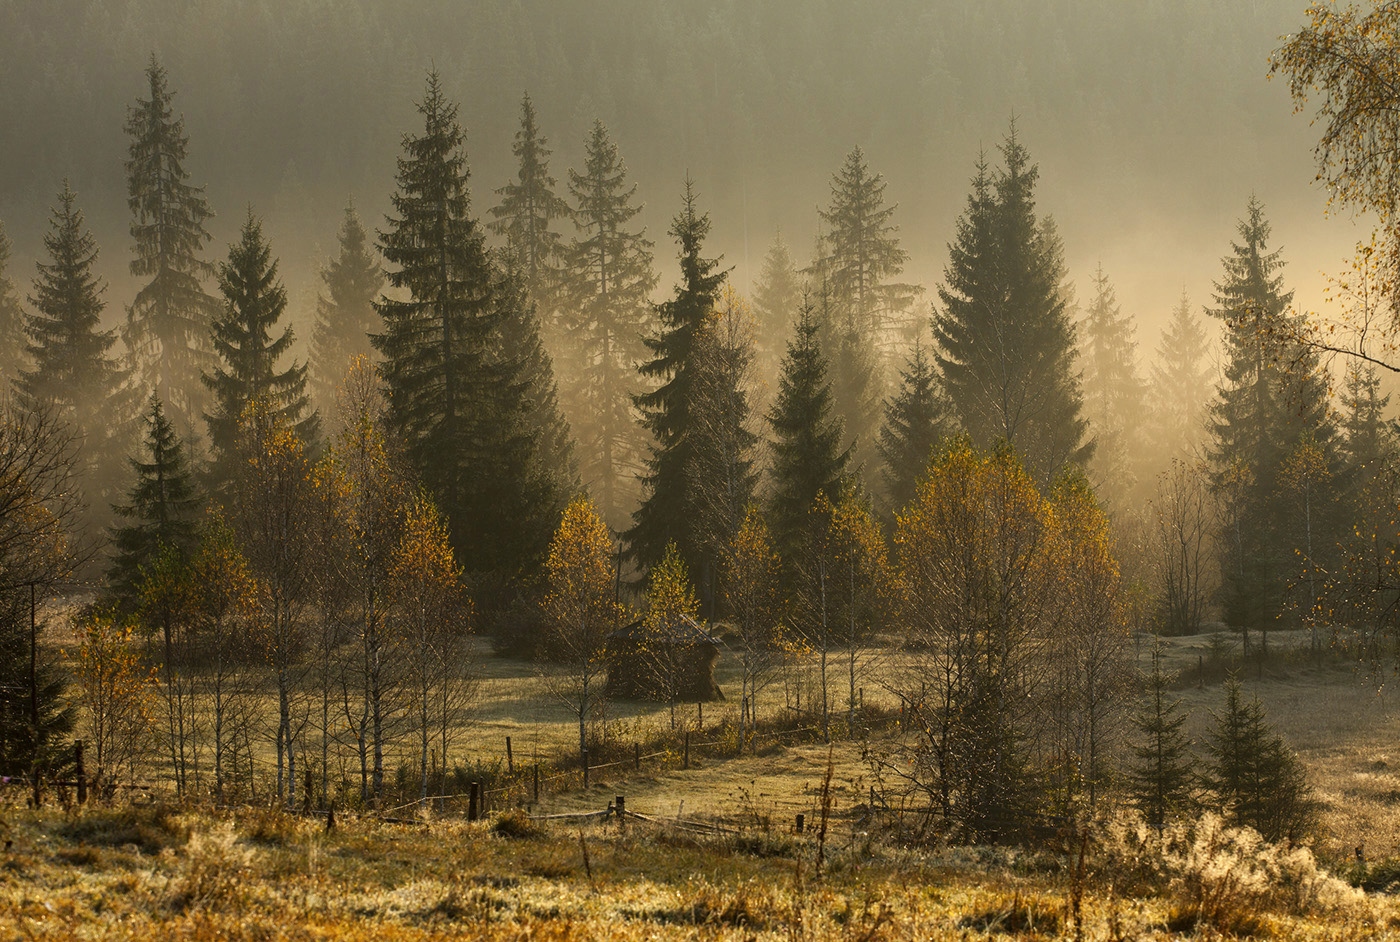 Осенний стелется туман... | Фотограф Михаил Глаголев | foto.by фото.бай